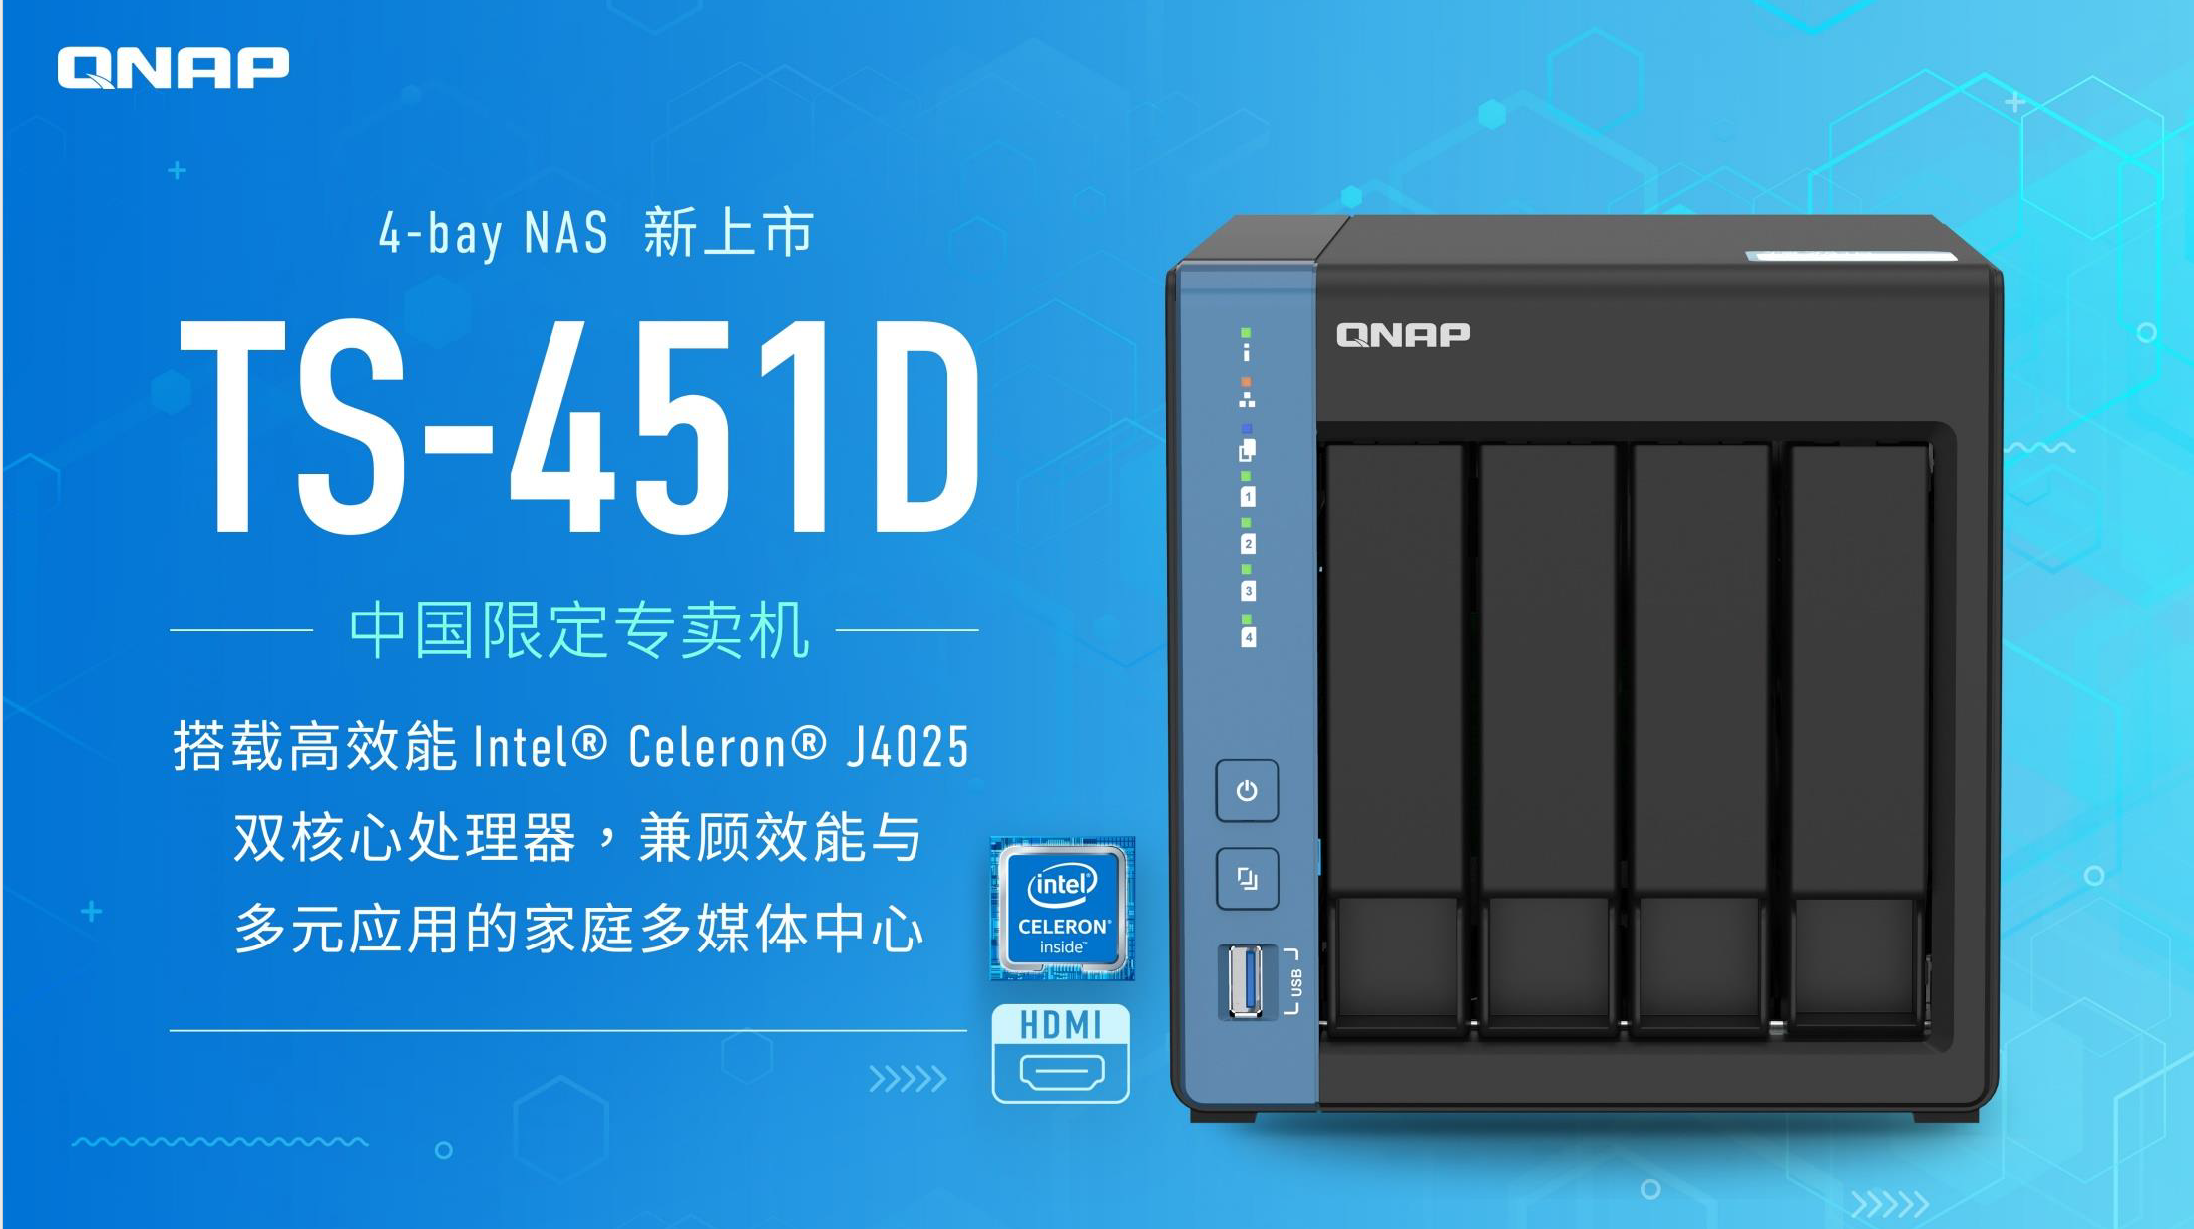 TS-451D 4-bay NAS 新上市： 搭载高效能Intel® Celeron® J4025 双核心